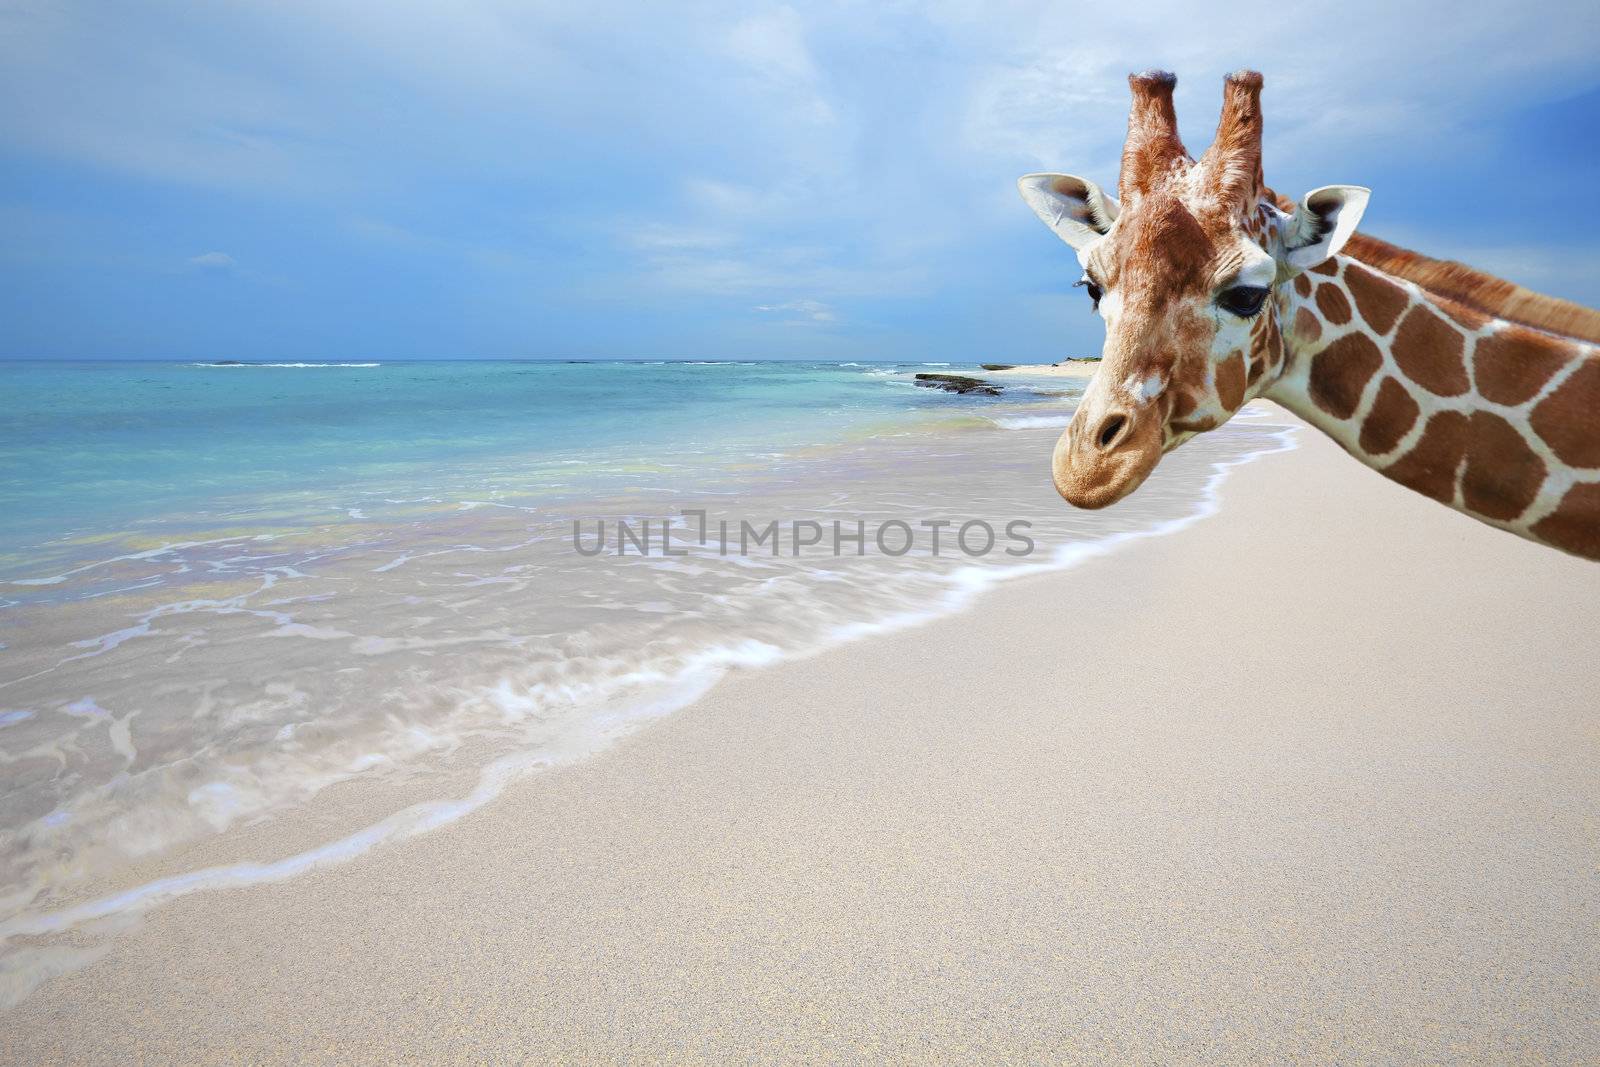 Giraffe on vacation, taking a self portrait at Boca Grandi beach, Aruba